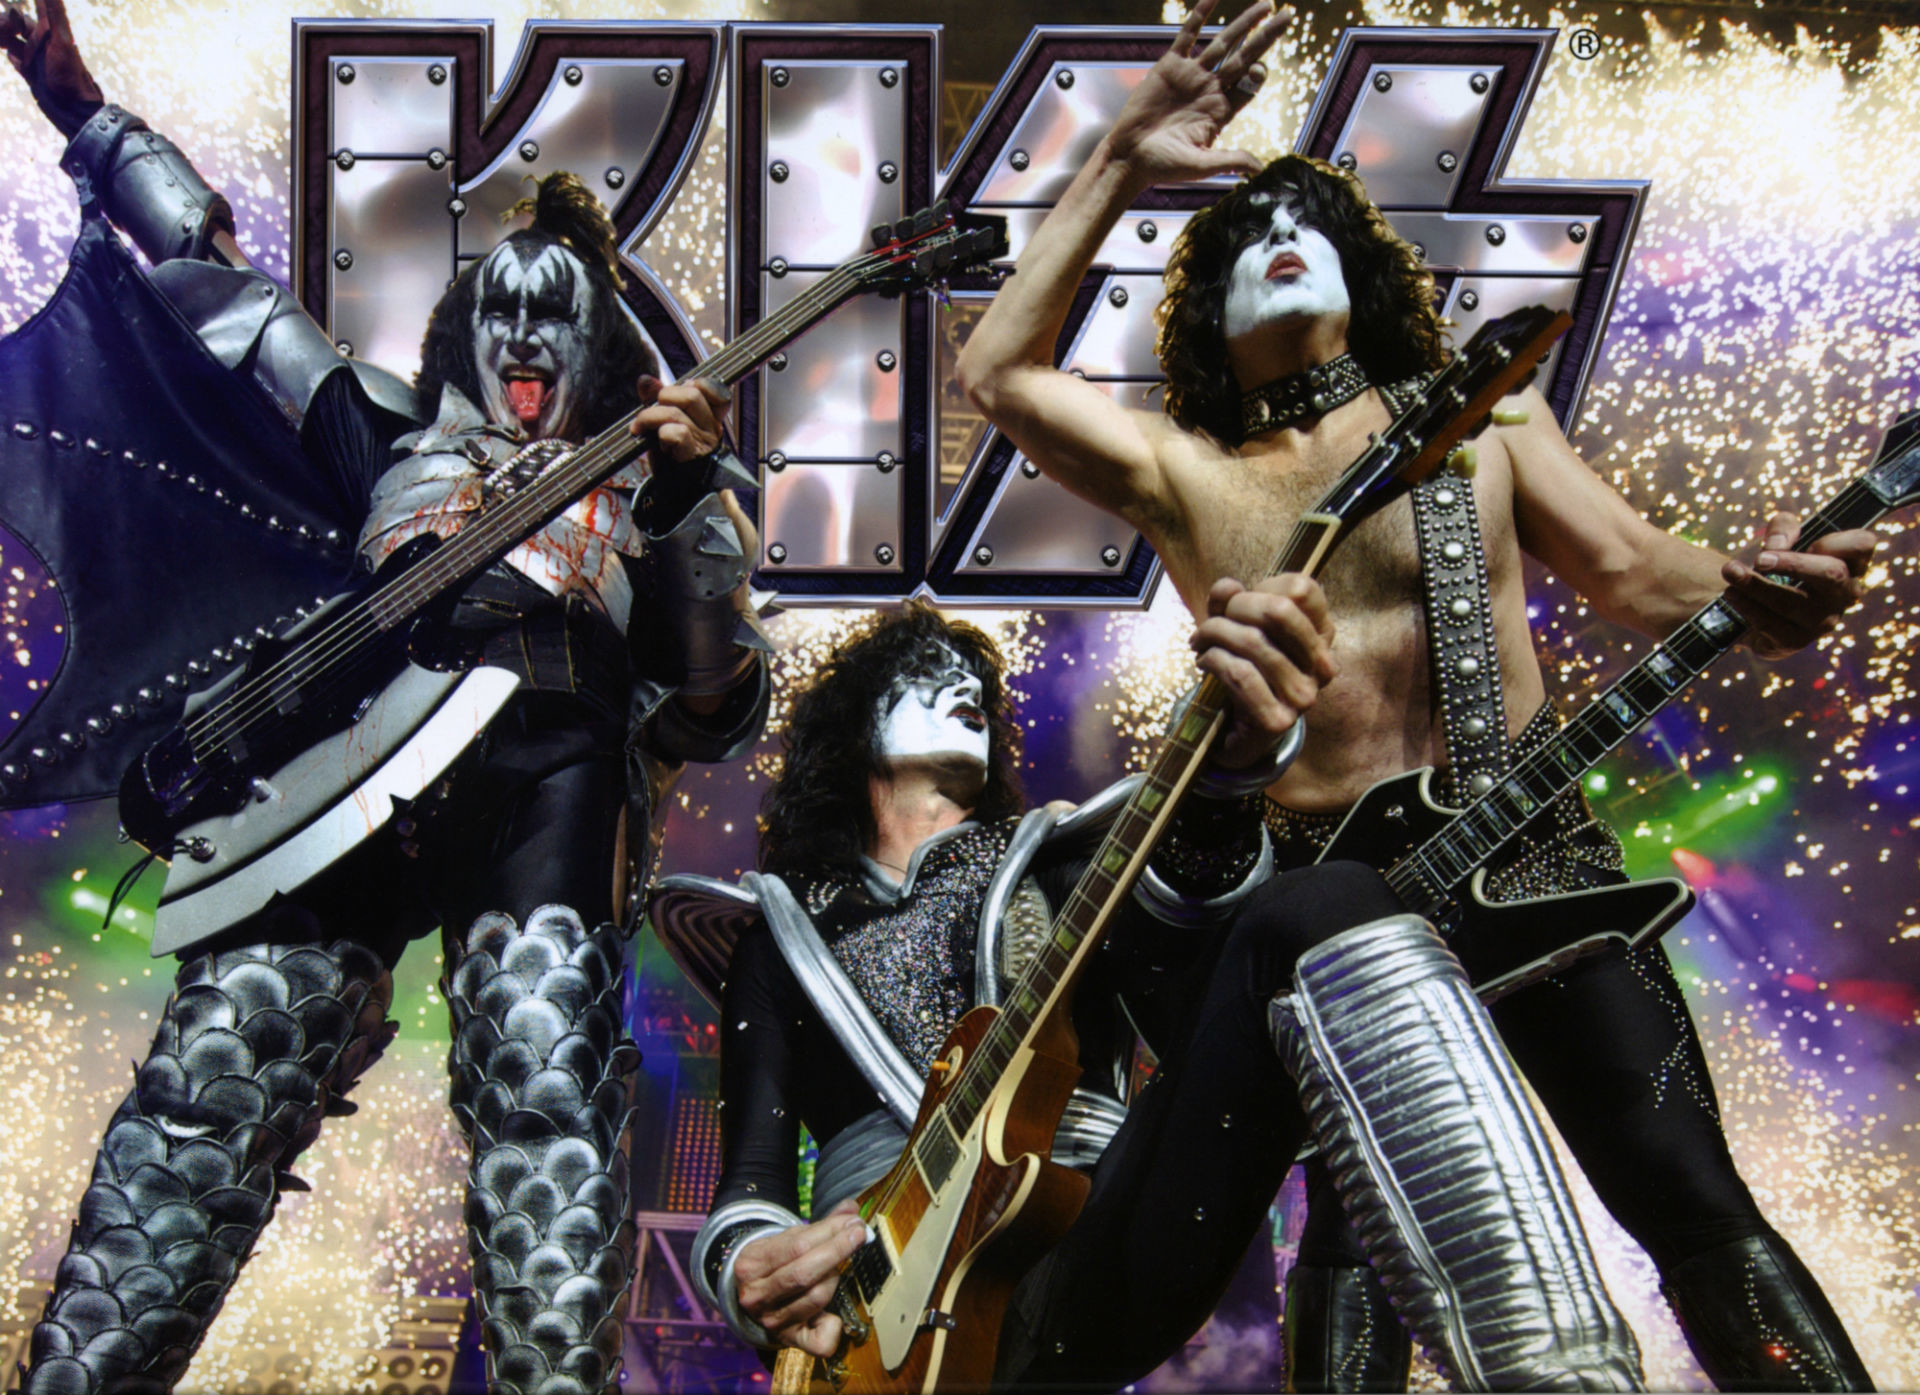 1920x1395 Kiss heavy metal rock bands concert guitar f wallpaper |  | 74055  | WallpaperUP